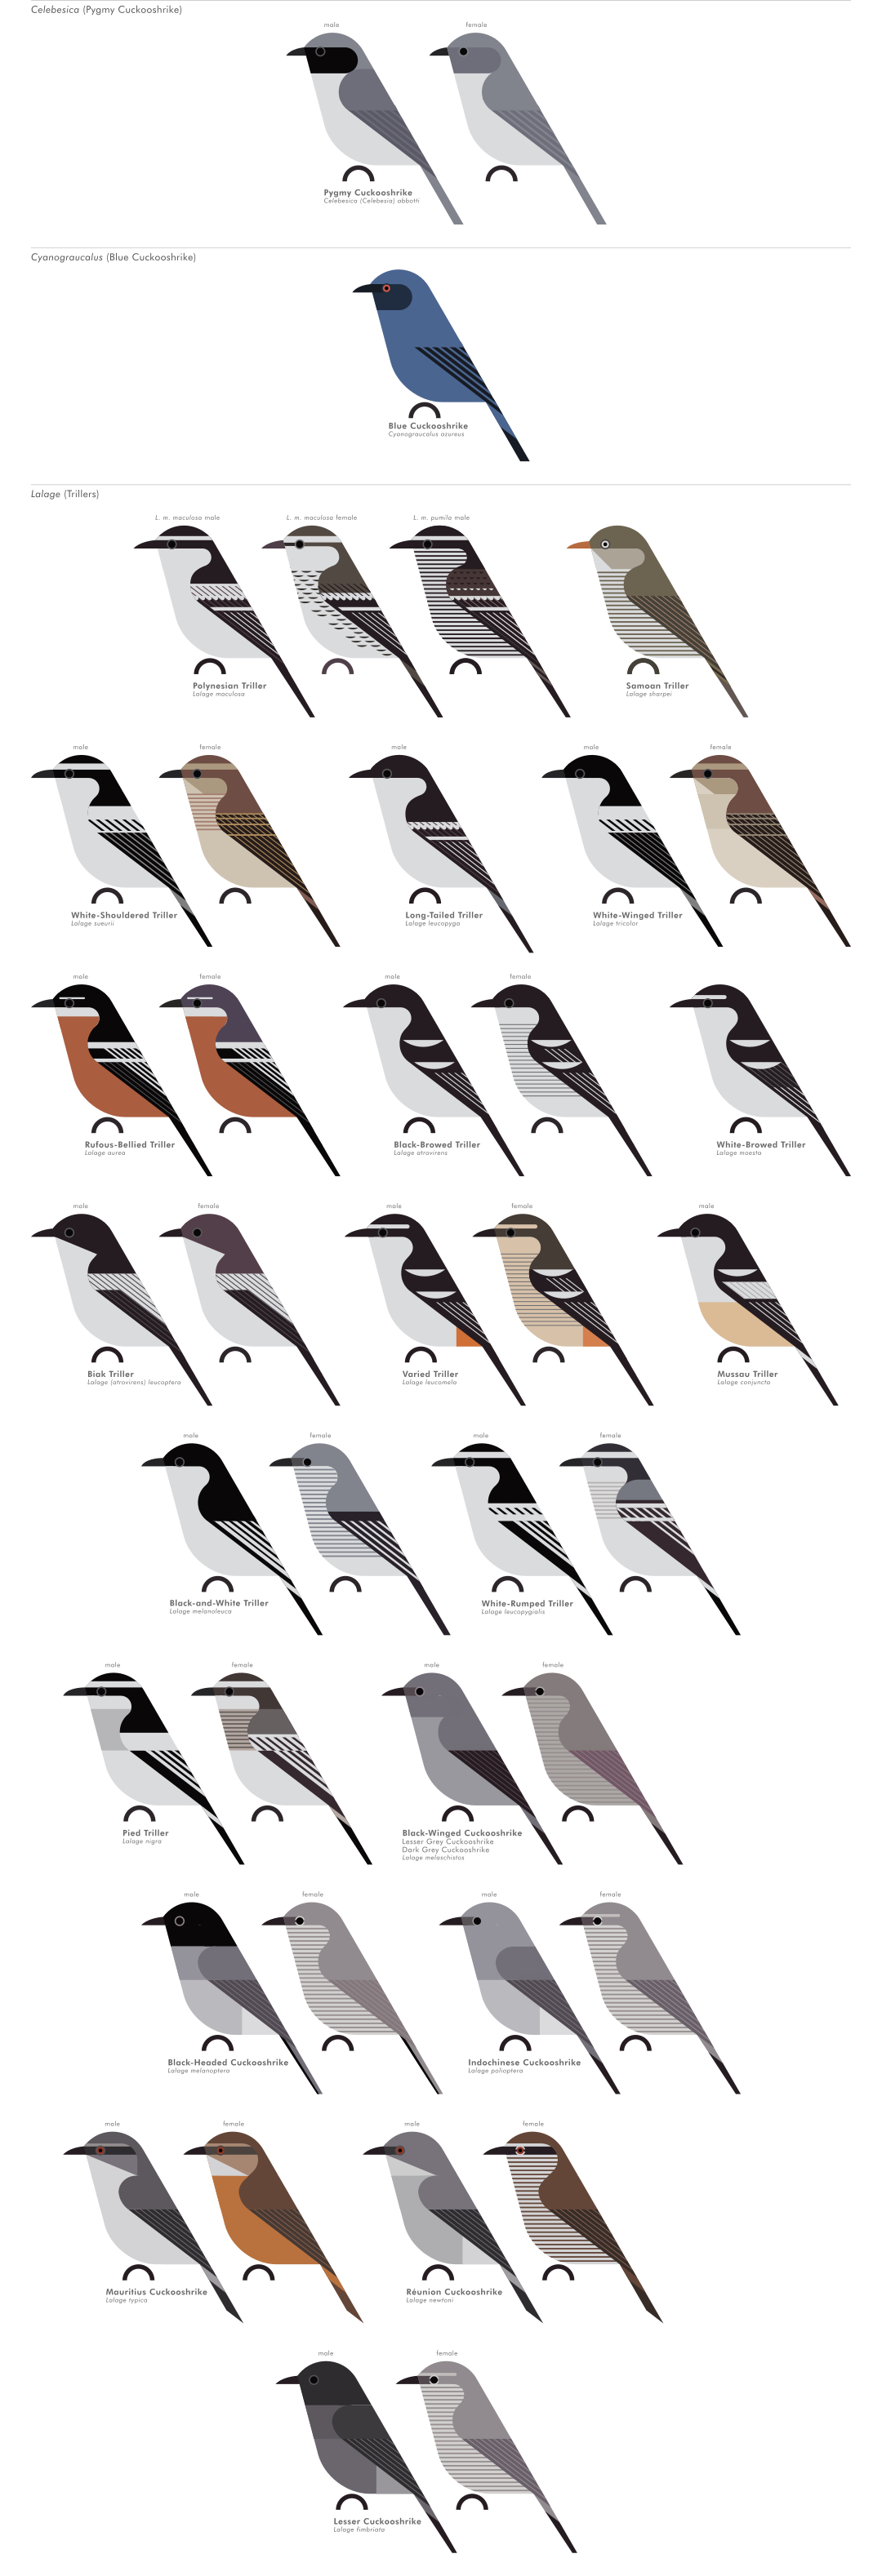 scott partridge - AVE - avian vector encyclopedia - cuckooshrikes - bird vector art